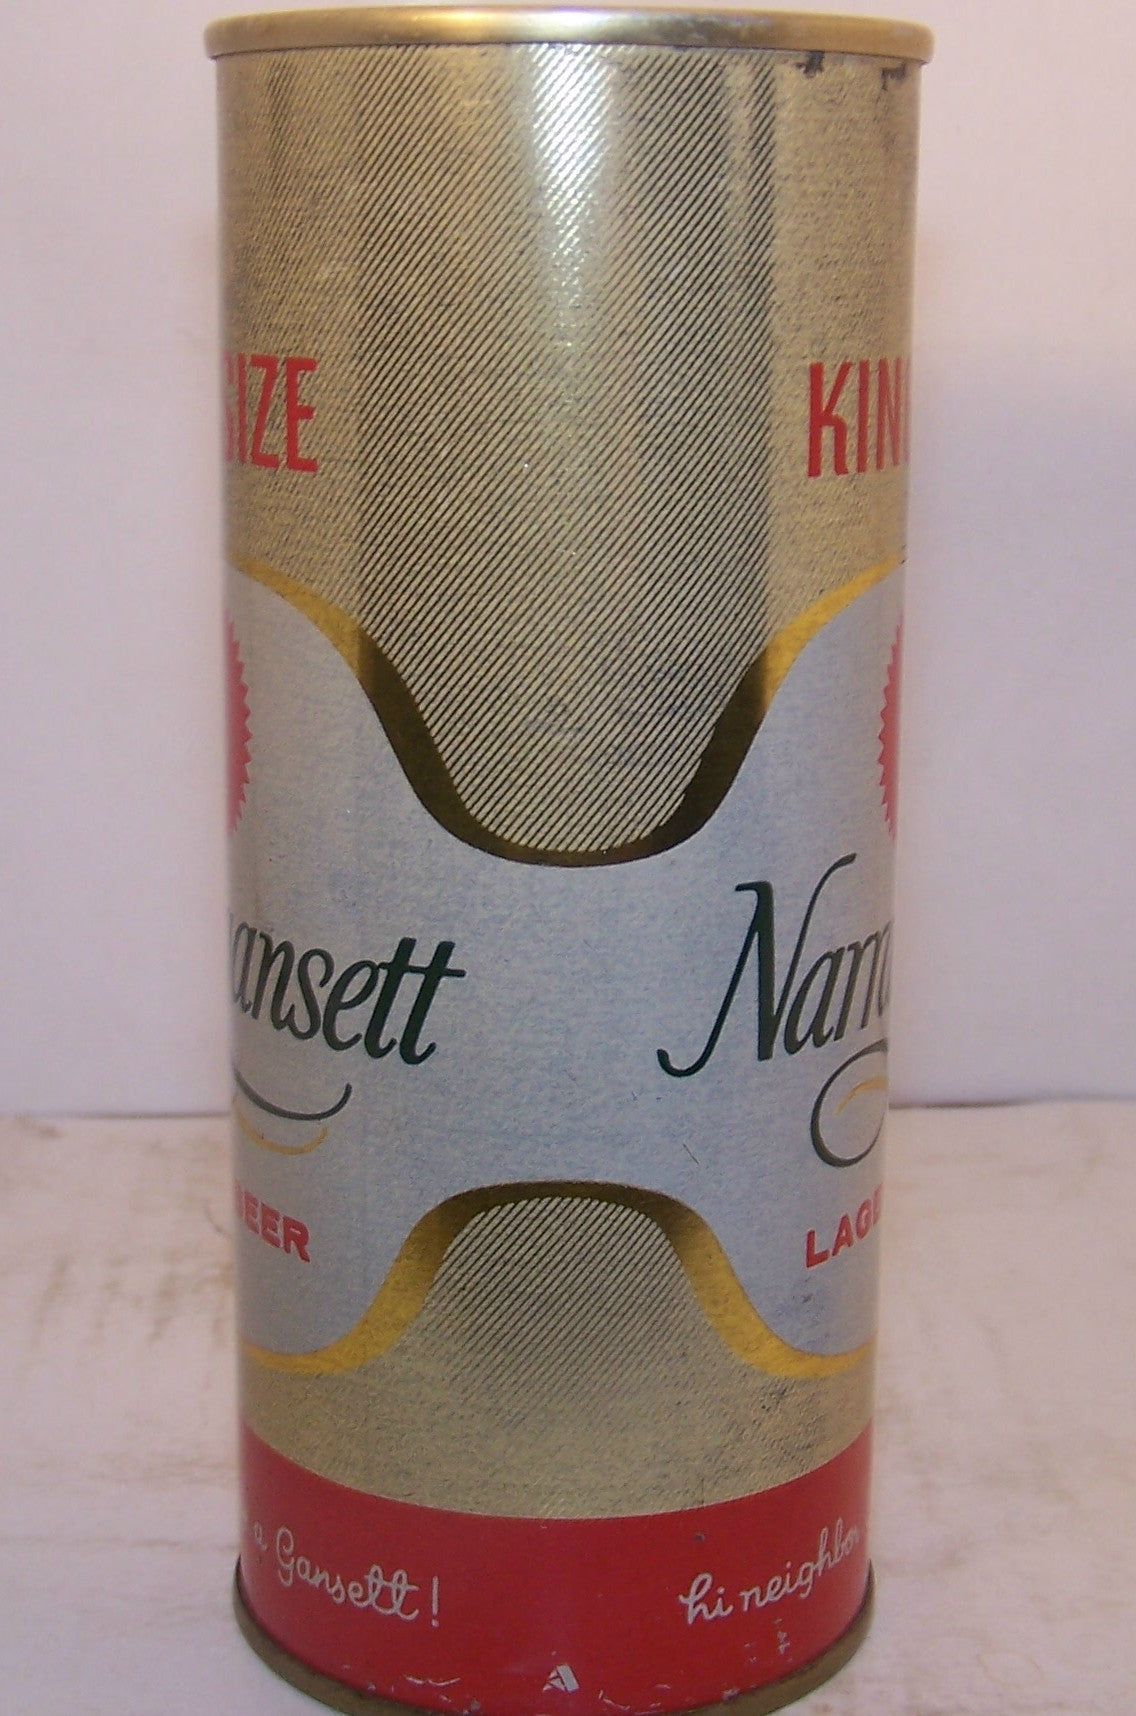 Narragansett Lager Beer king size, USBC II 157-14 Grade 1- Sold on 2/11/15